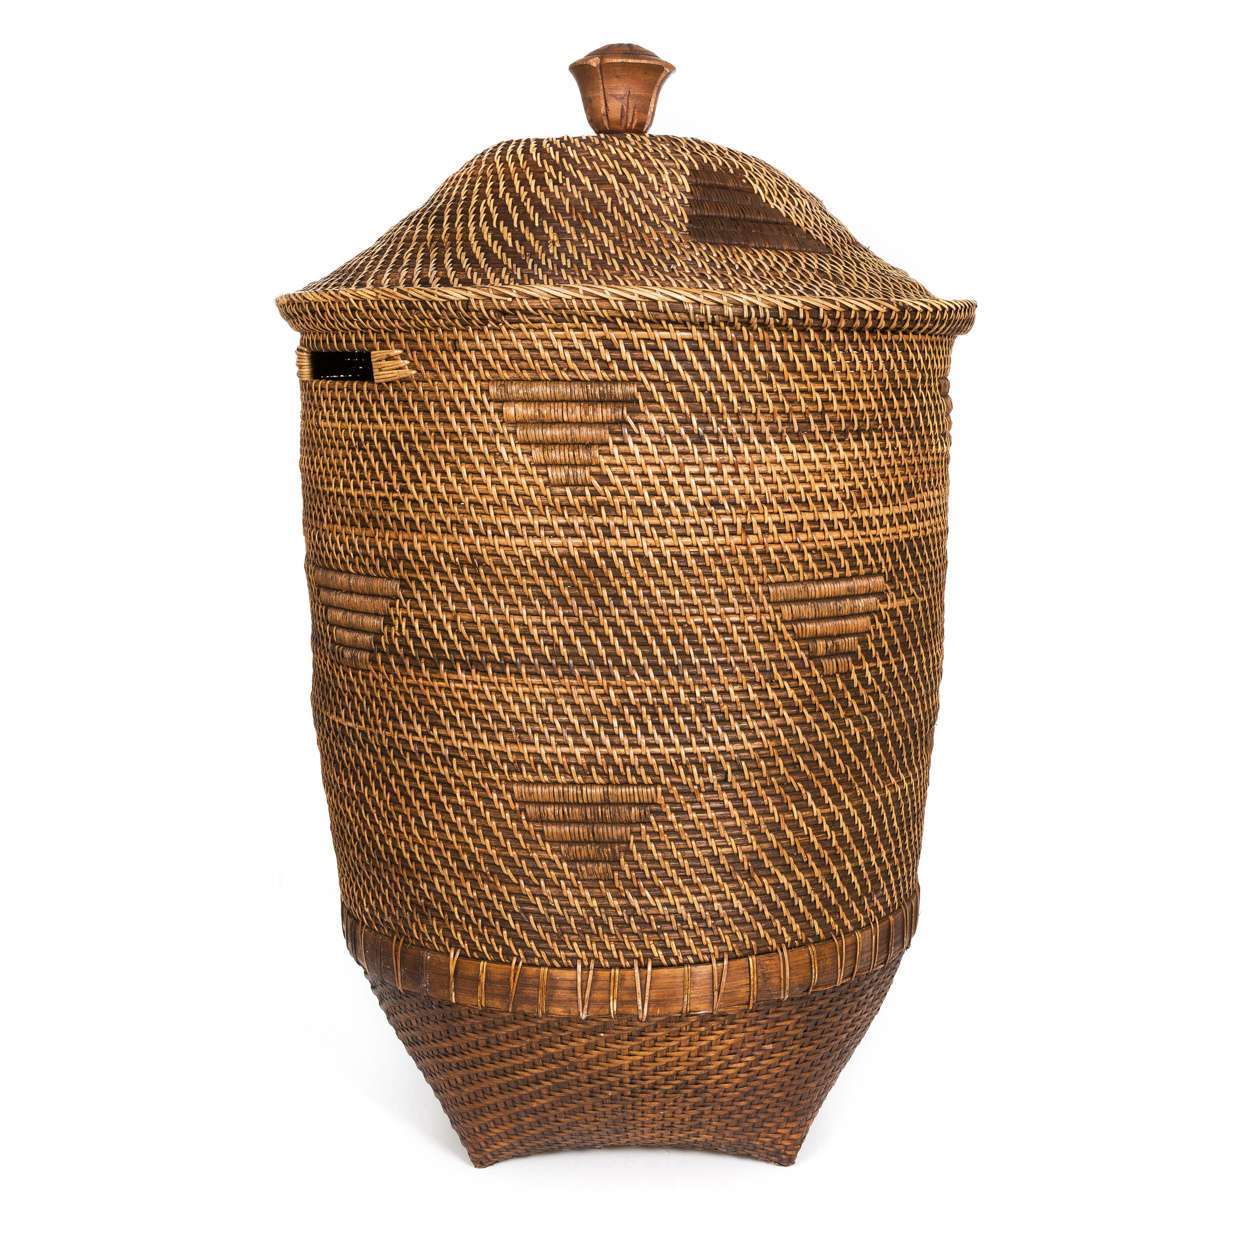 cesta para la ropa mimbre - Buscar con Google  Large laundry basket,  Storage baskets with lids, Wicker